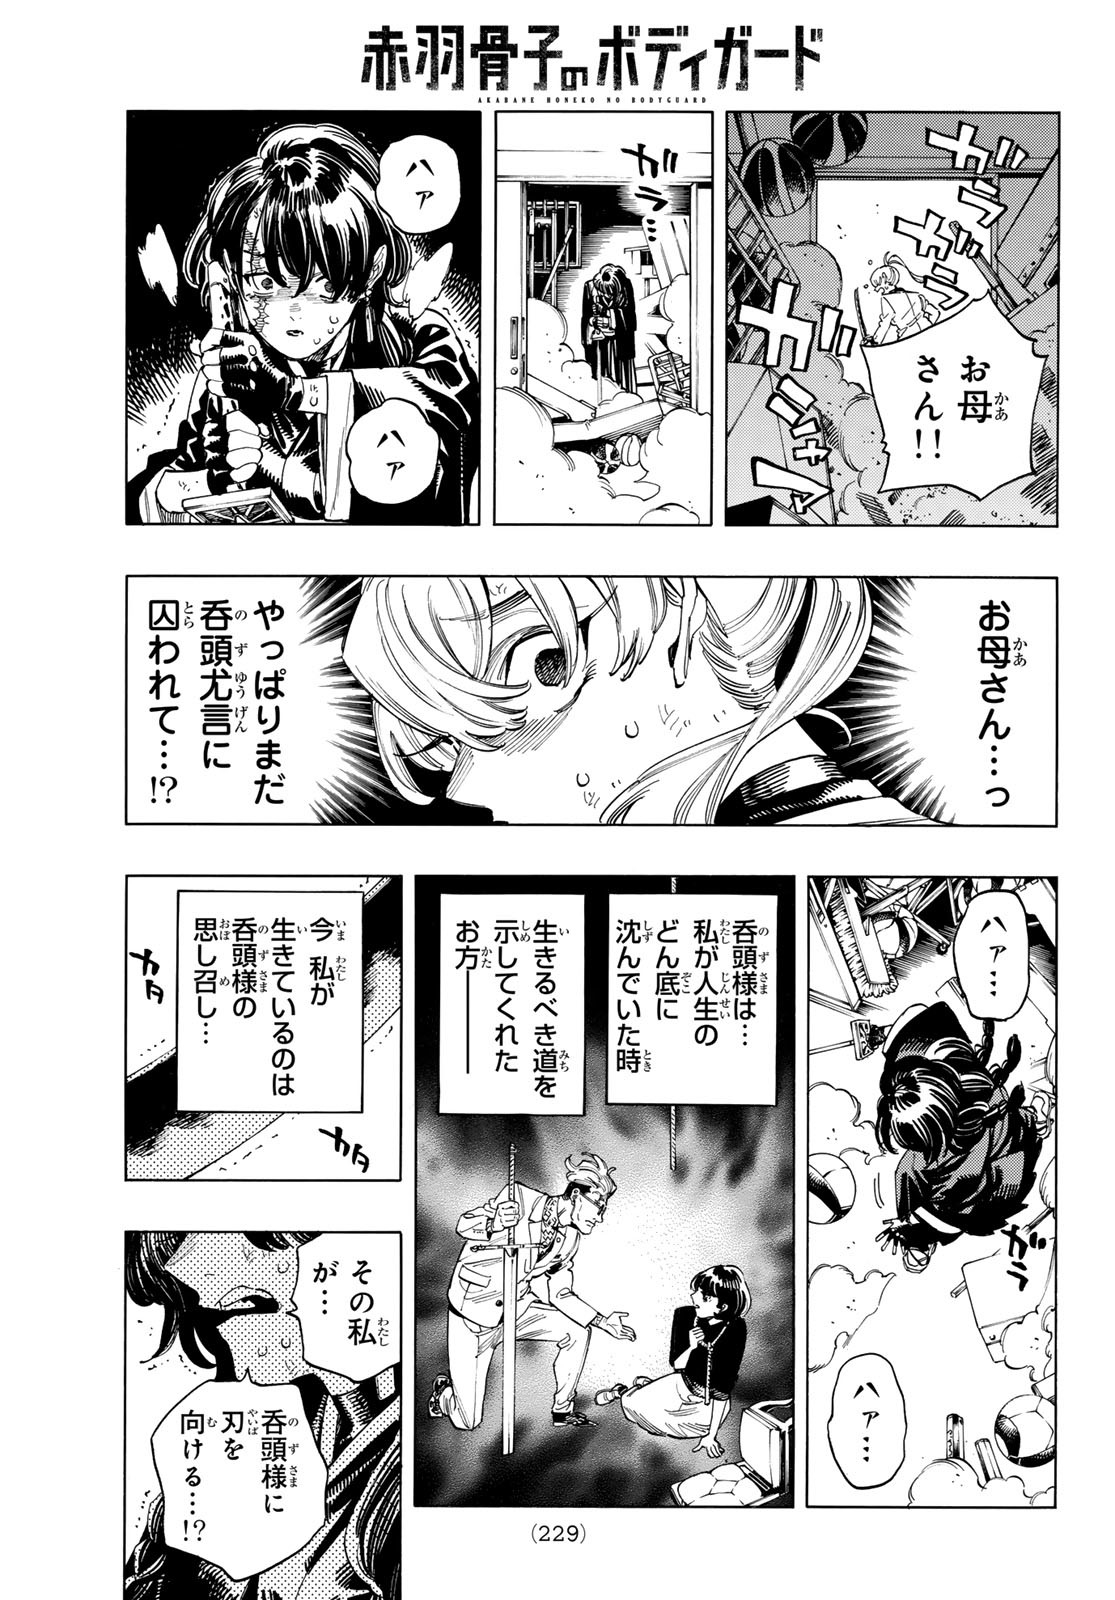 Akabane Honeko no Bodyguard - Chapter 62 - Page 3